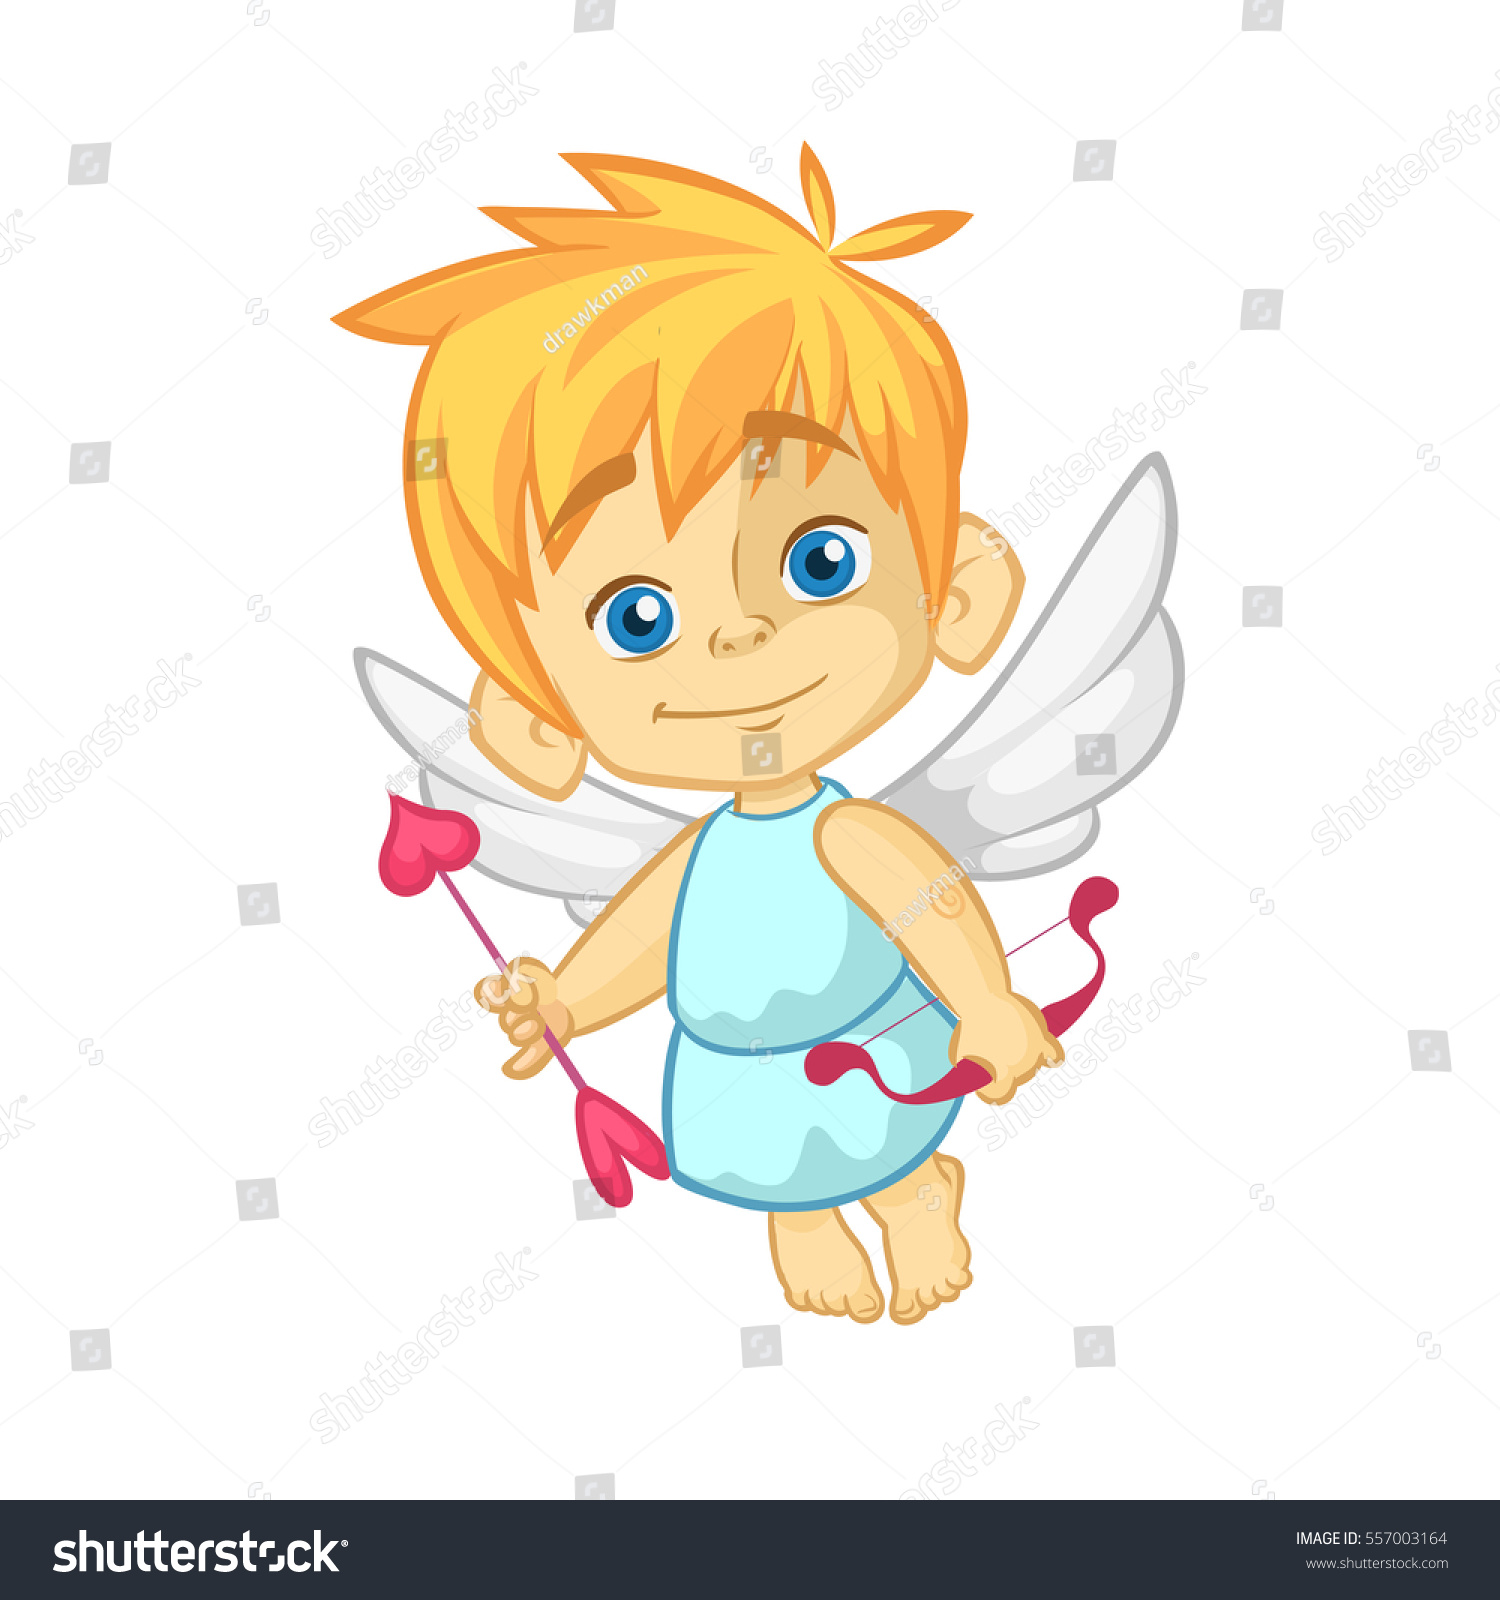 Funny Cupid Cartoon Character Bow Arrow Stock Vector 557003164 - Shutterstock1500 x 1600